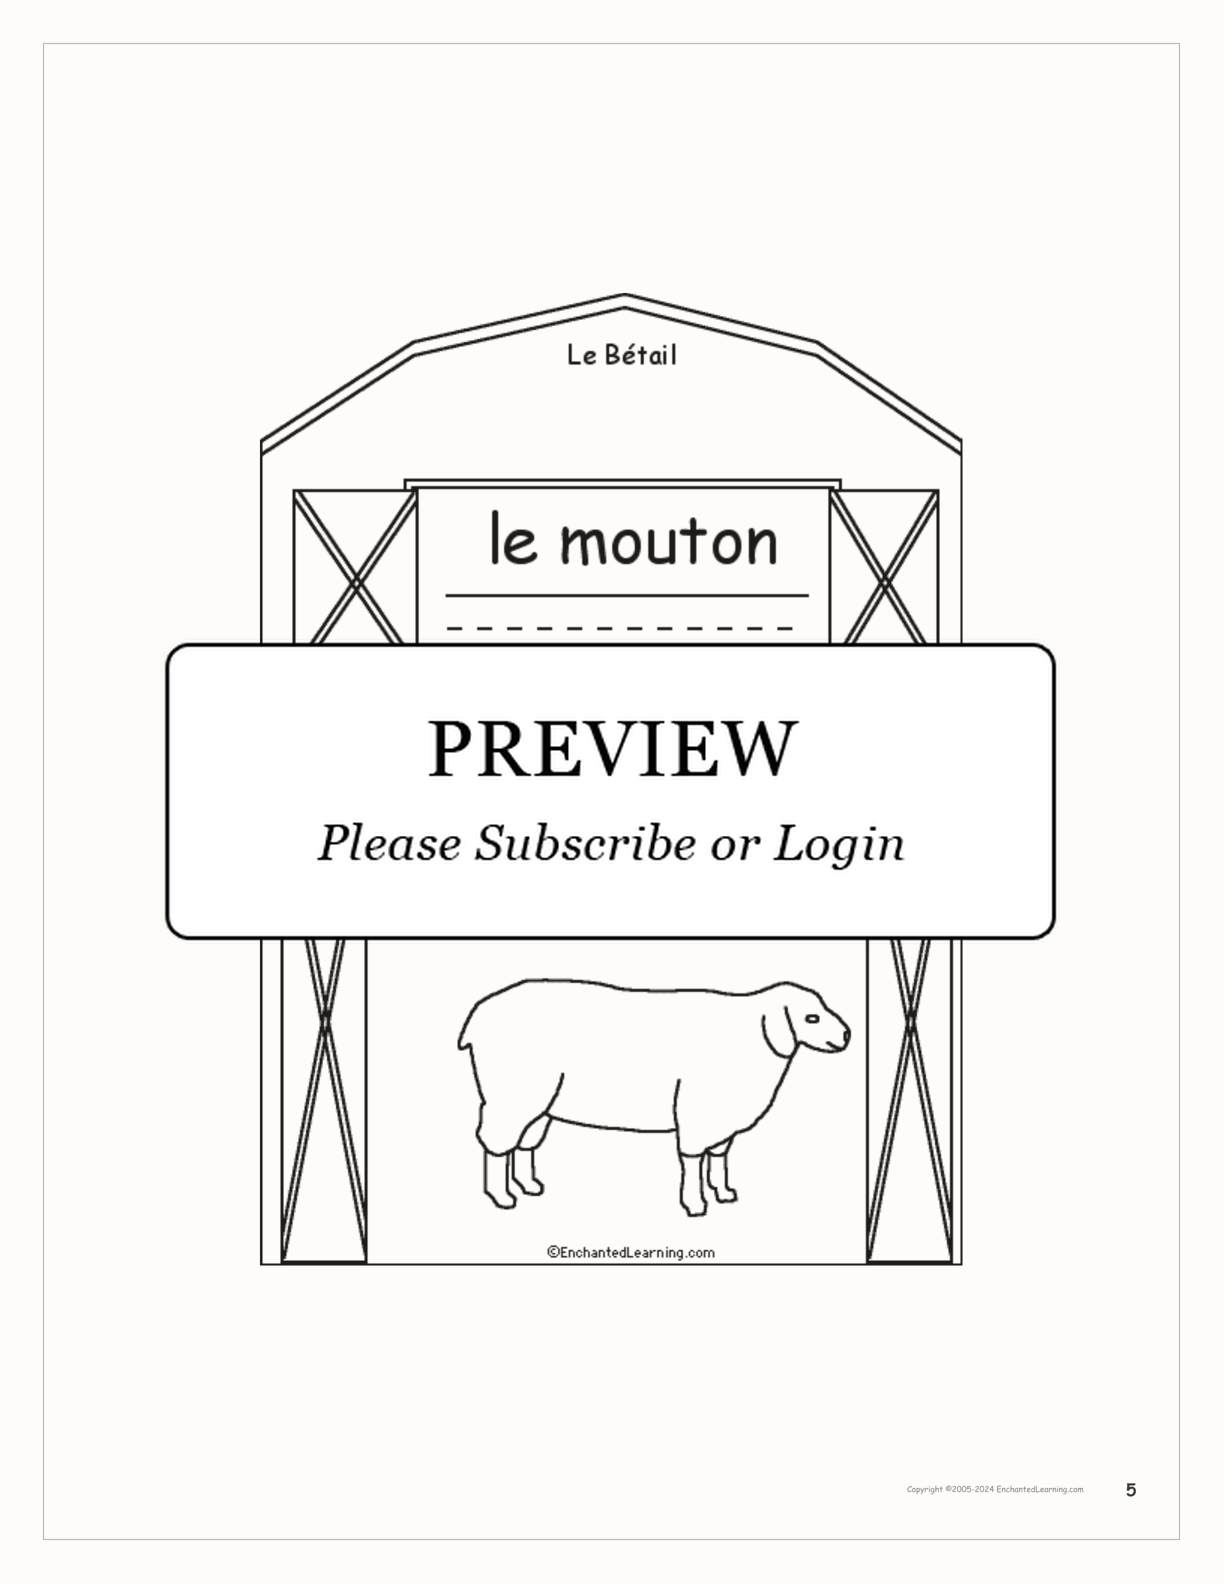 Bétail (Livestock) interactive printout page 5